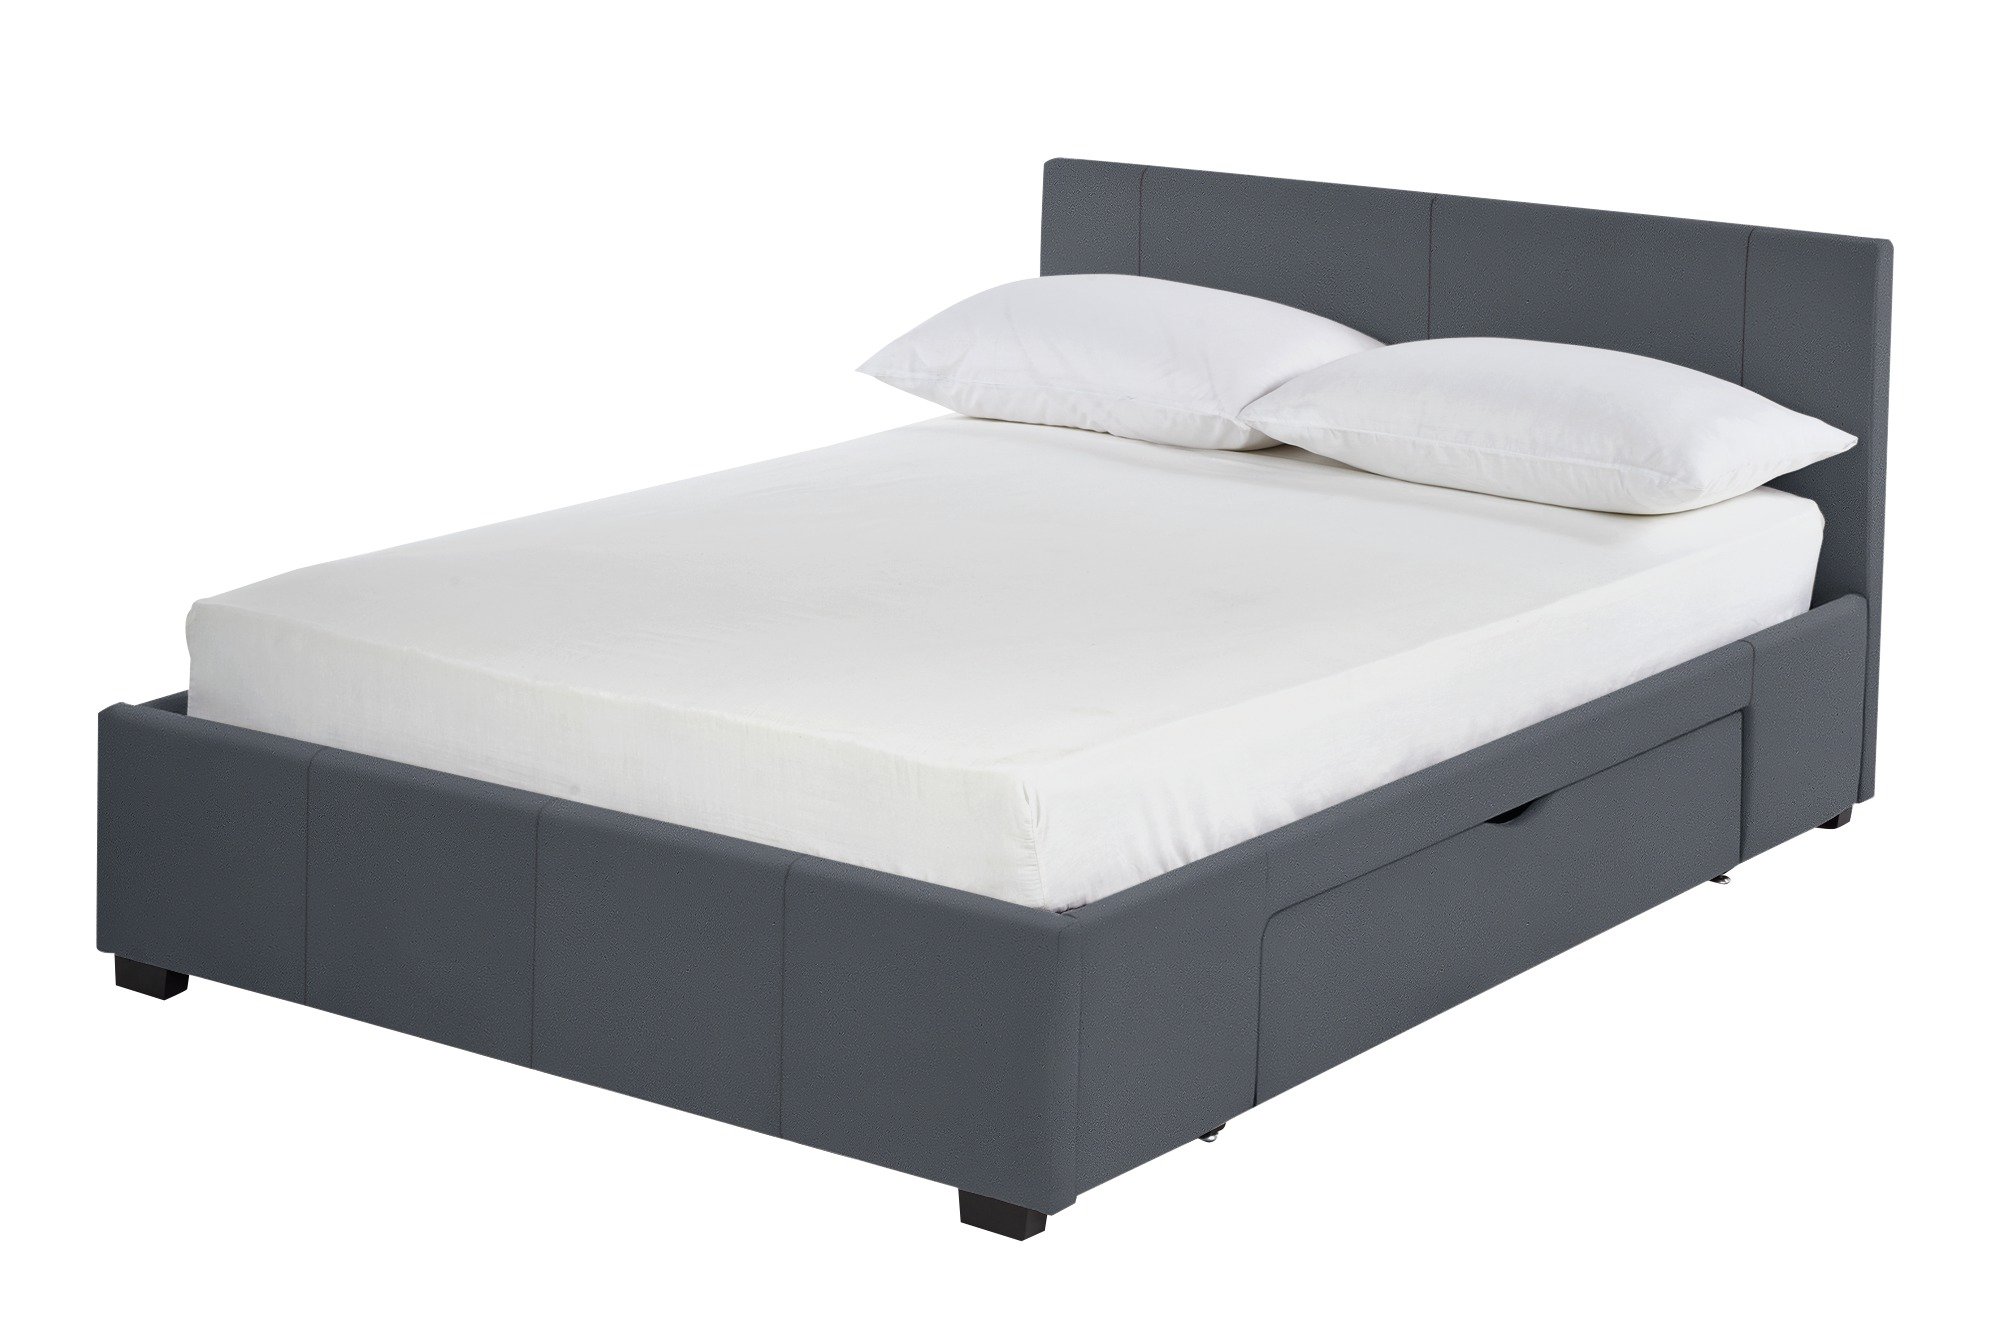 Argos Home Lavendon Grey Kingsize 2 Drawer Bed Frame